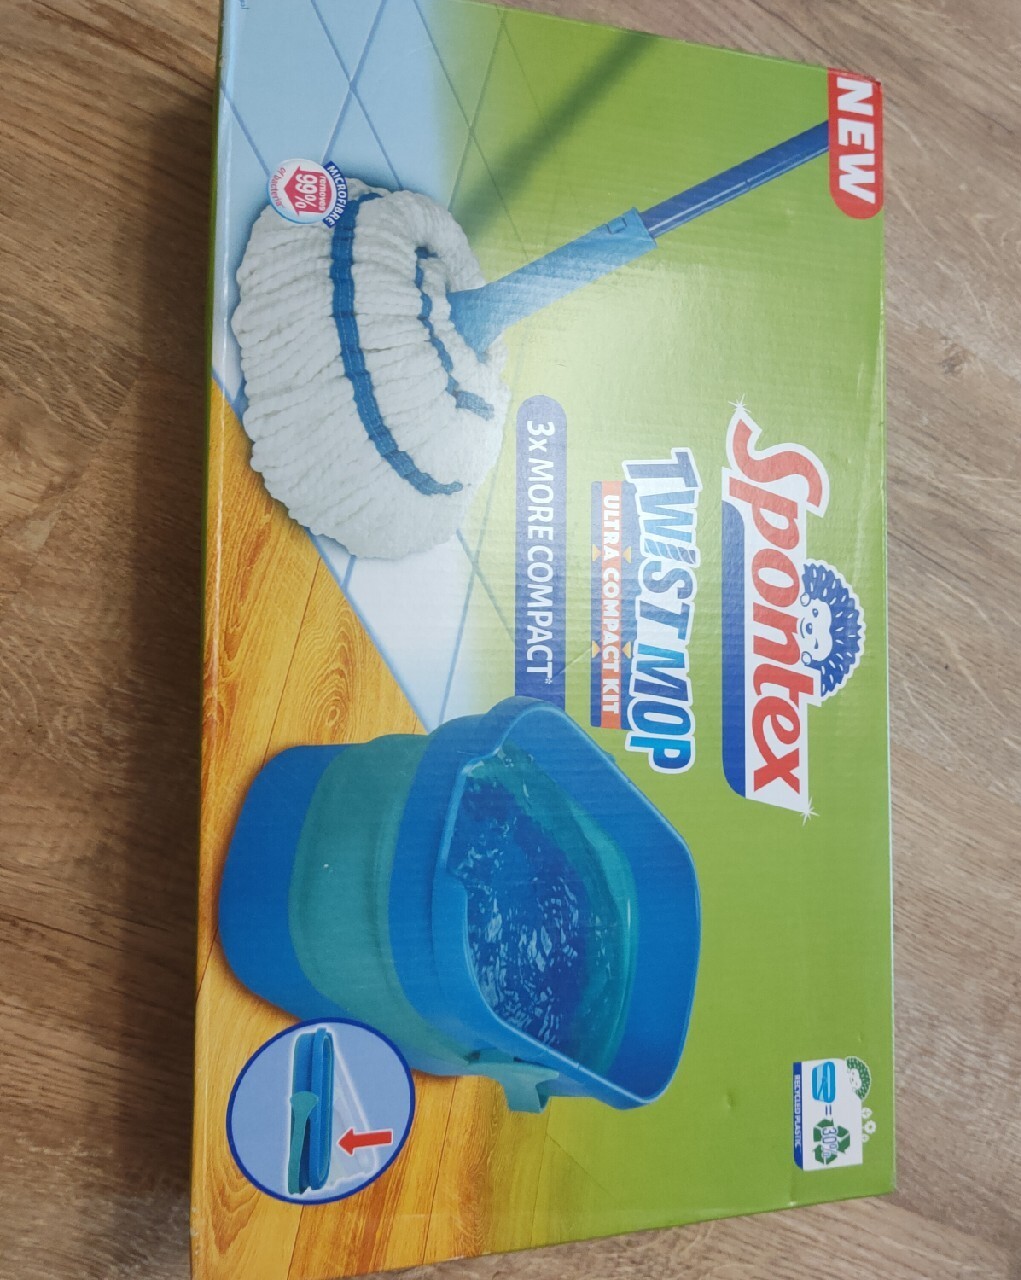 Spontex Twist Mop Ultra Compact Kit 